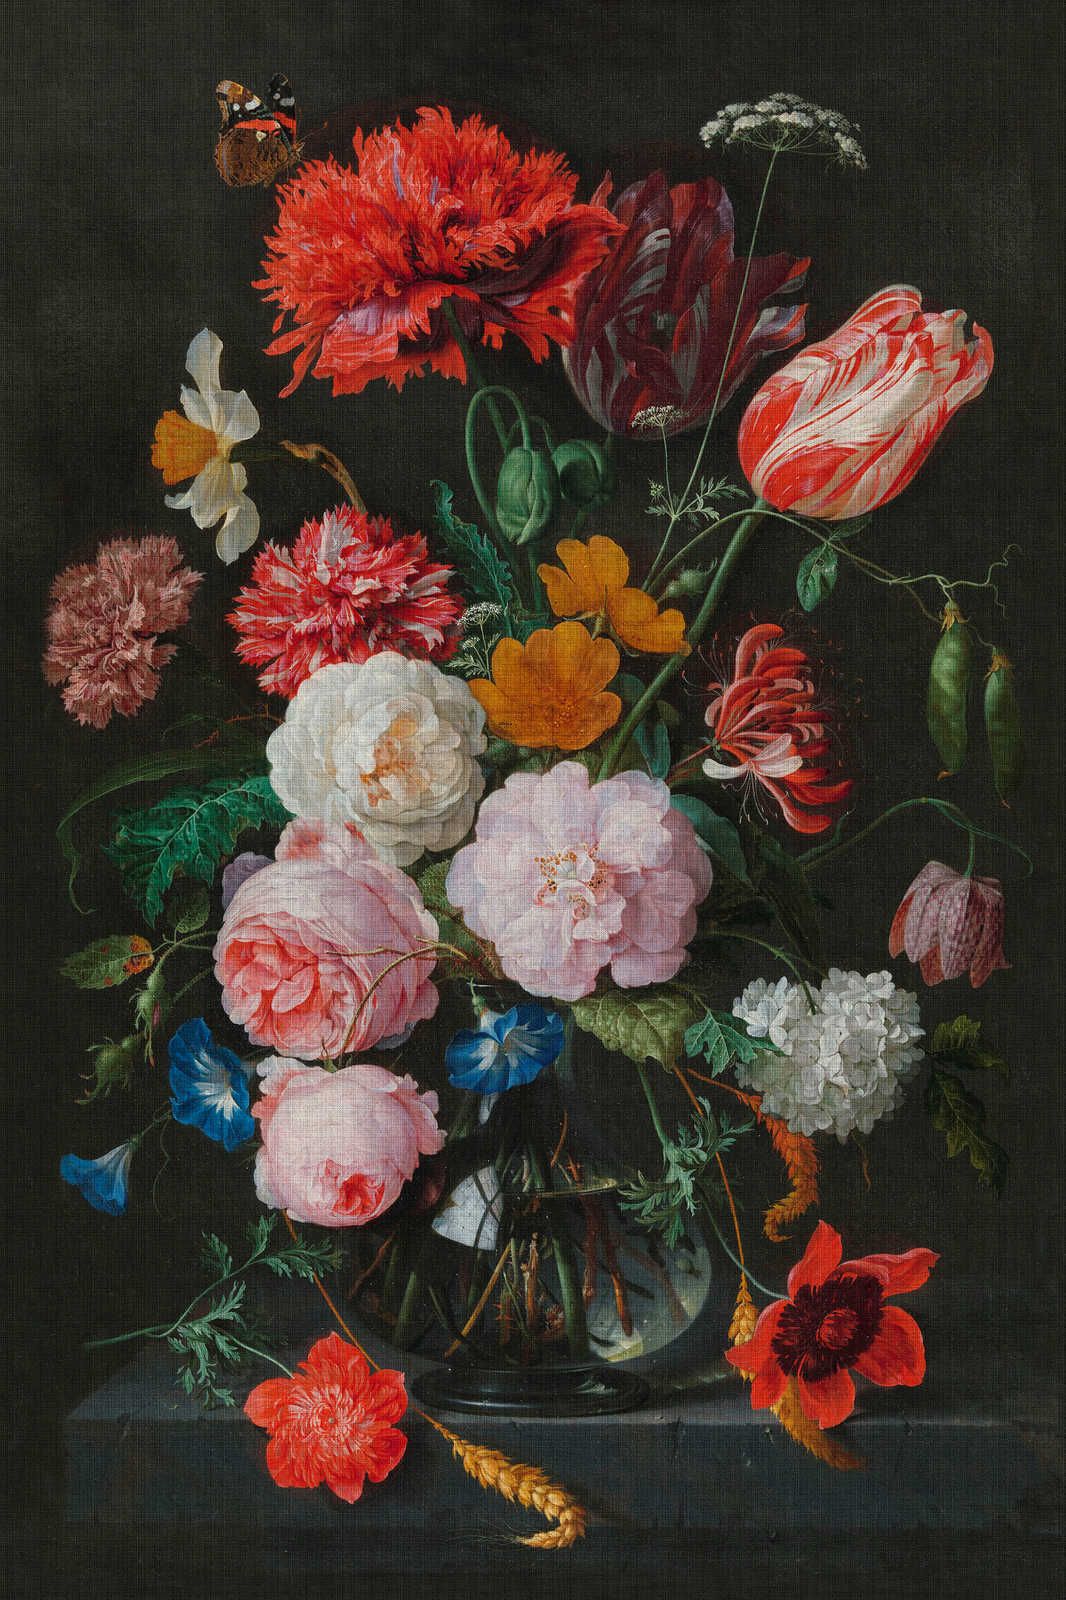             Artists Studio 4 - Toile Fleurs Naturel morte avec roses - 0,60 m x 0,90 m
        